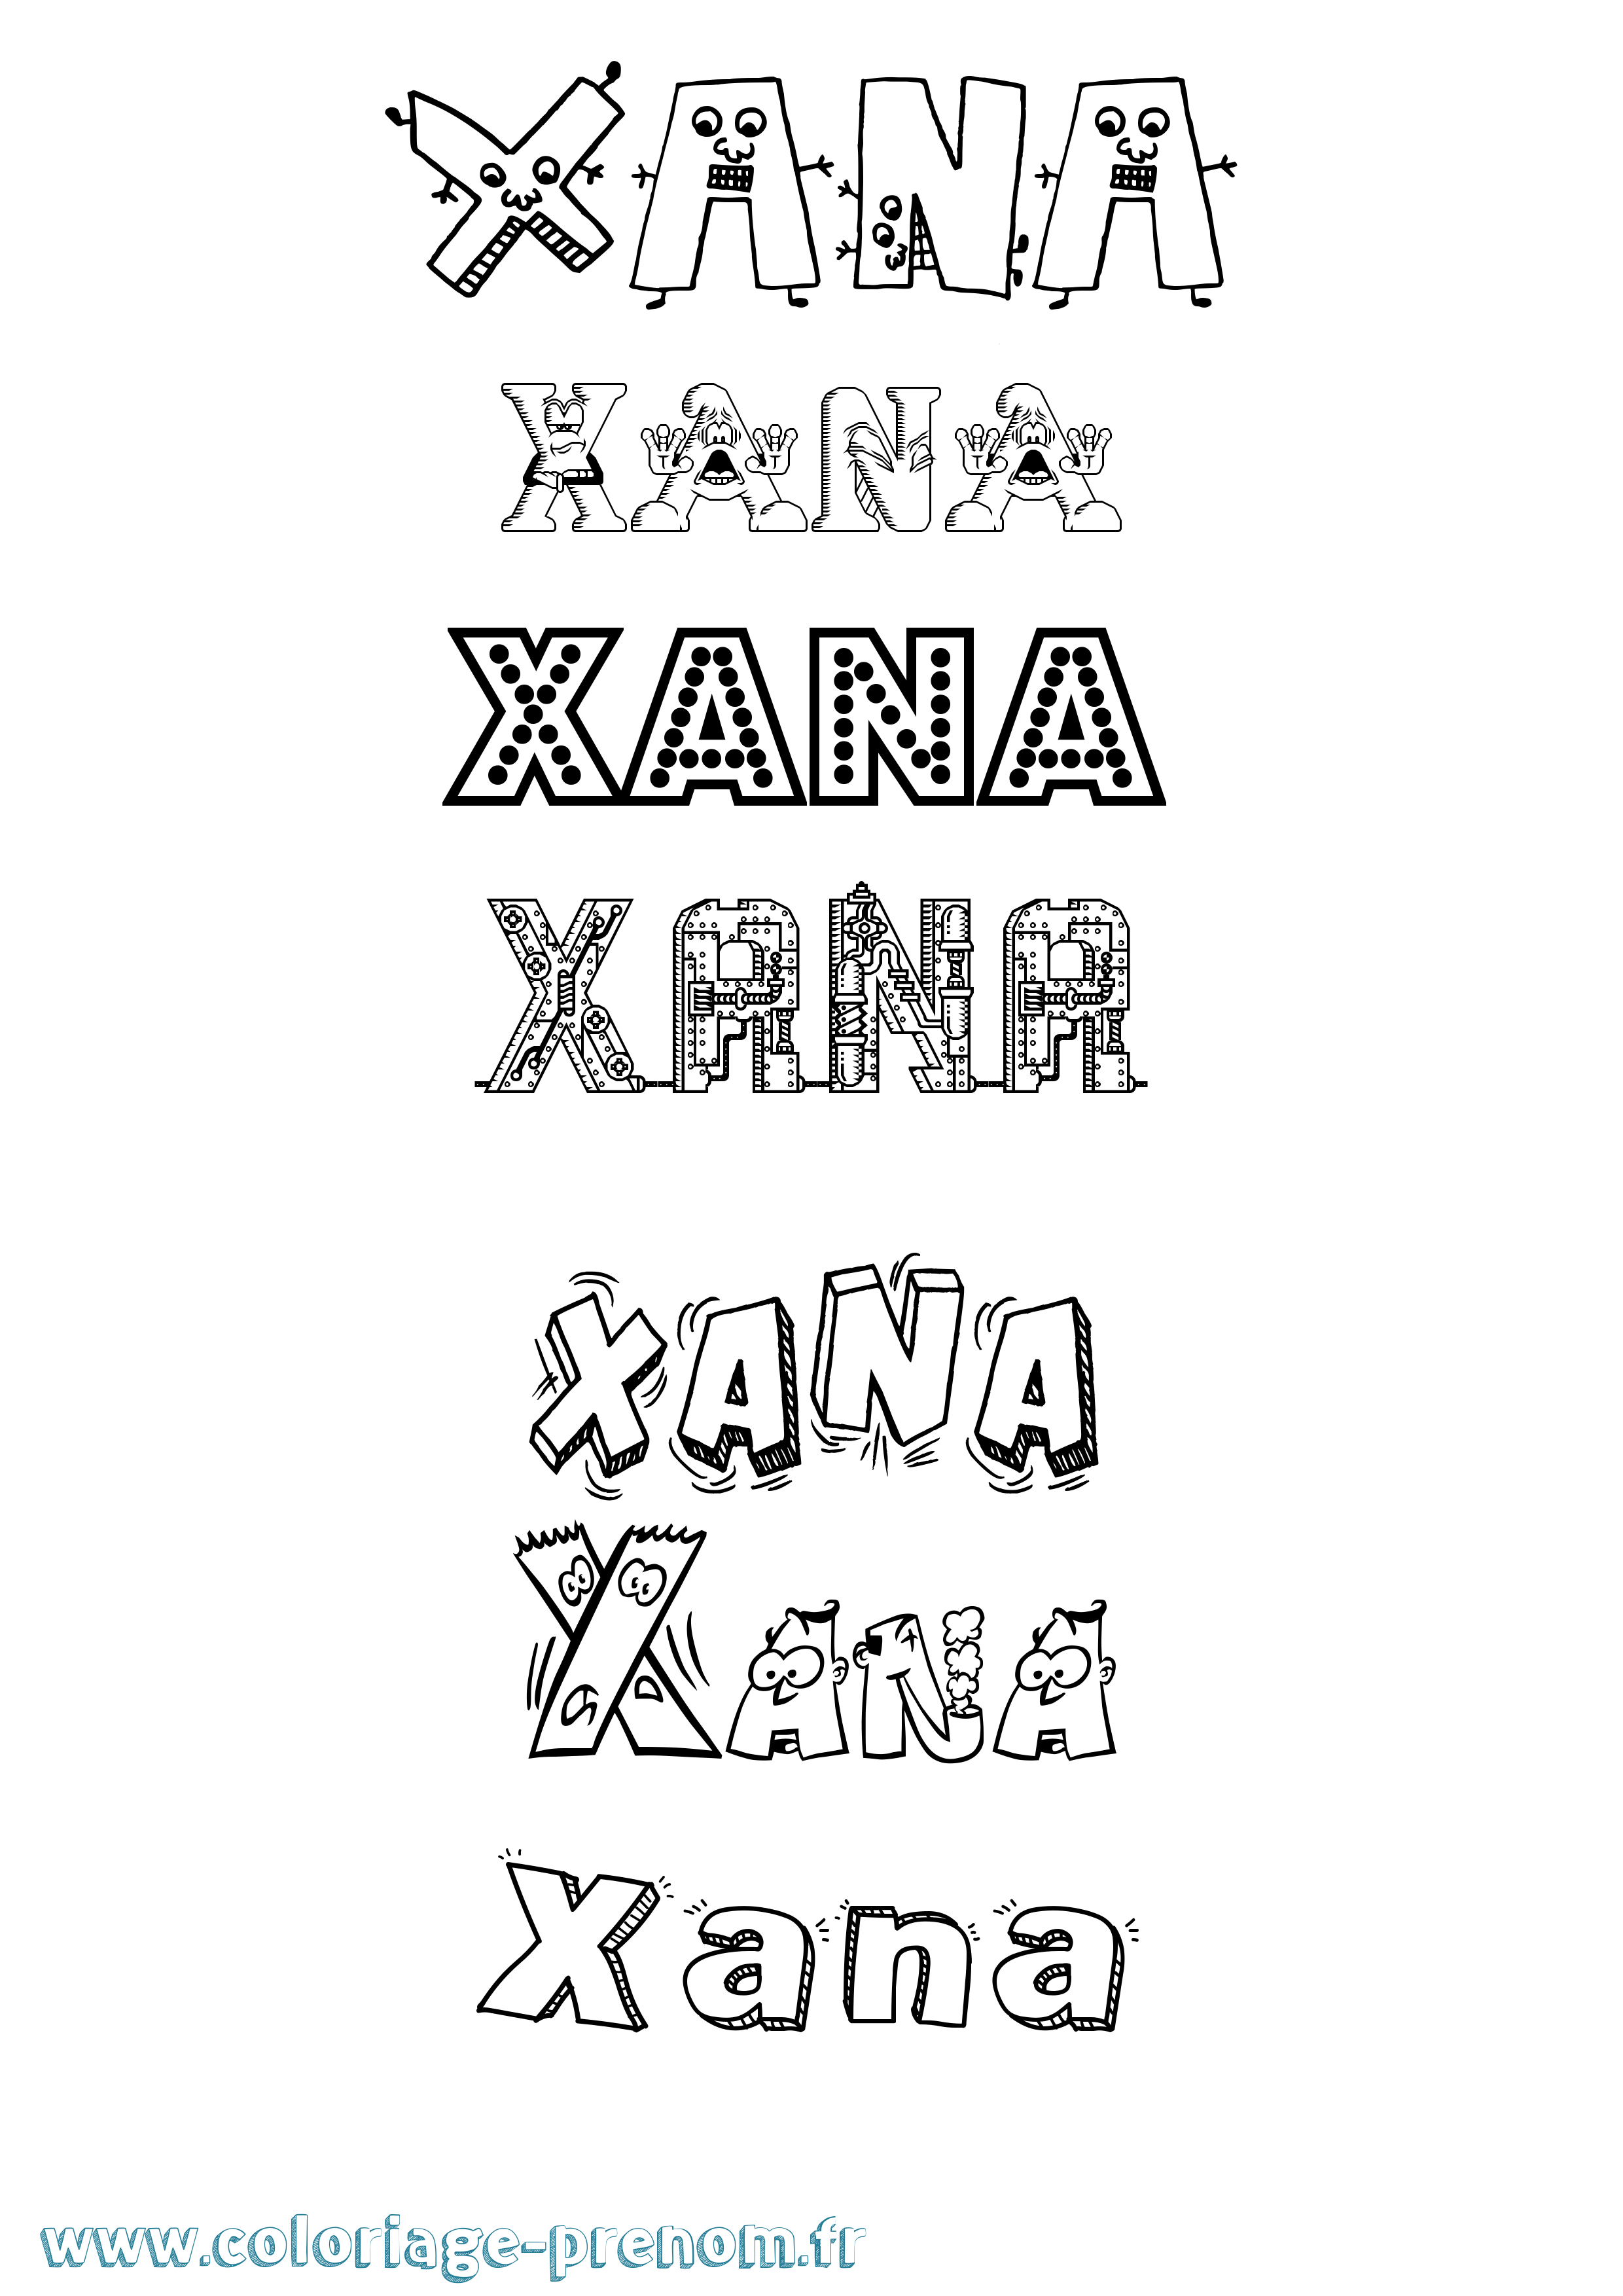 Coloriage prénom Xana Fun